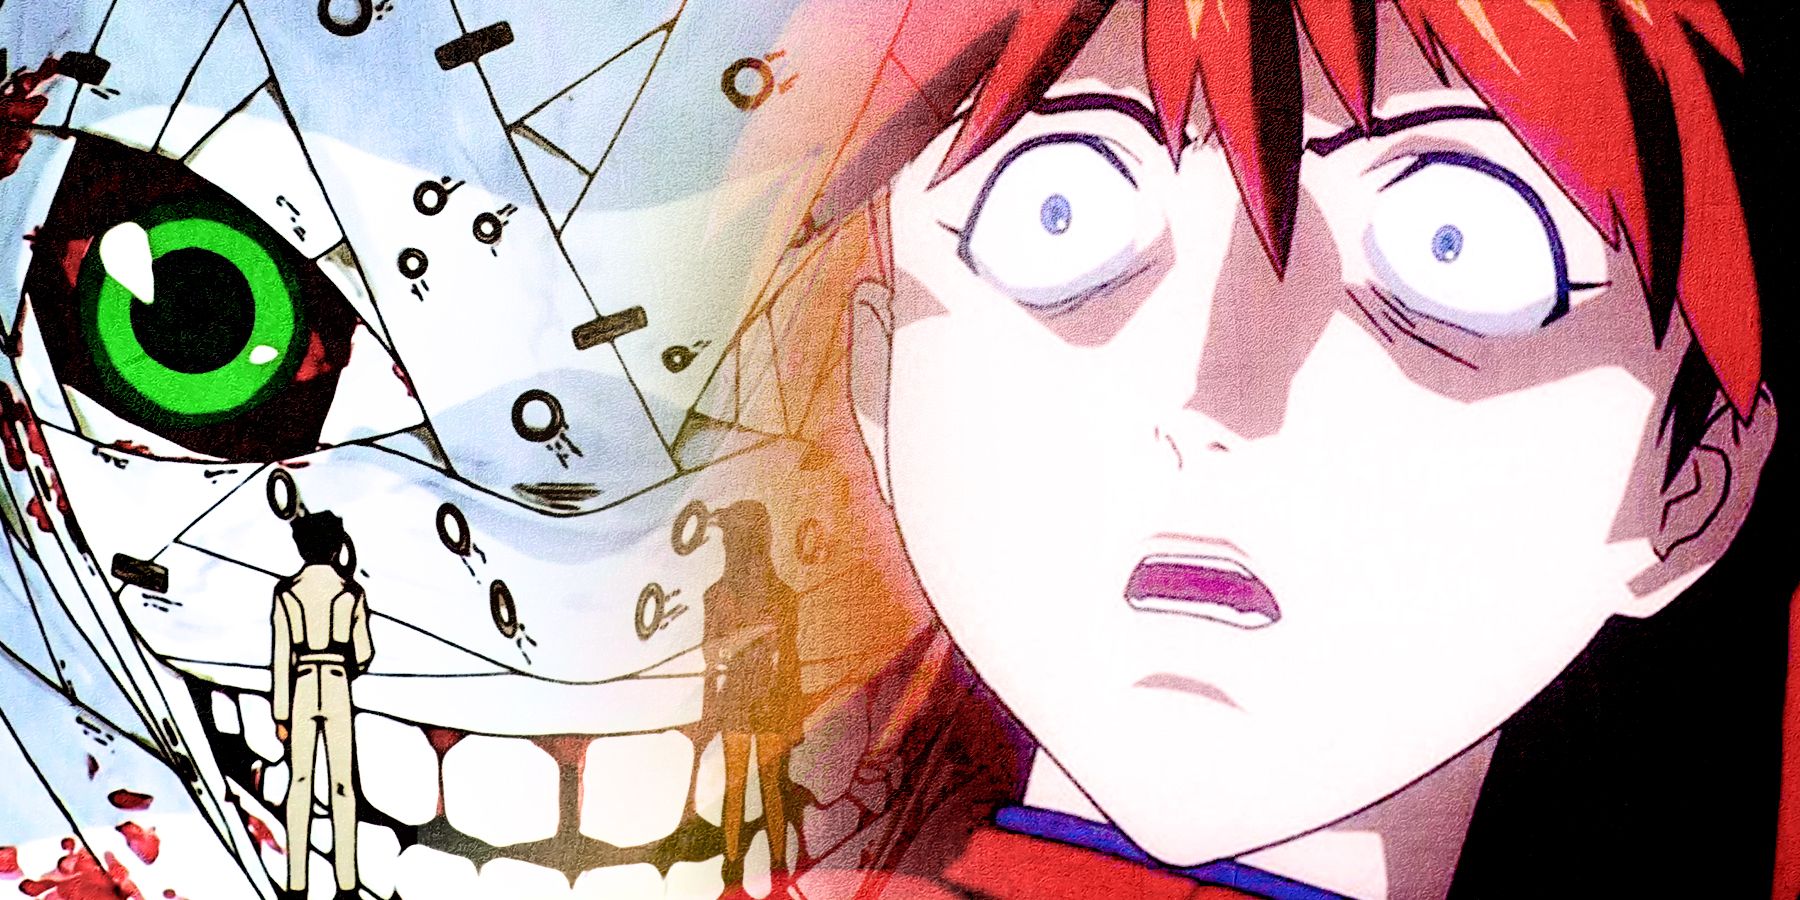 15 Anime To Watch If You Like Neon Genesis Evangelion